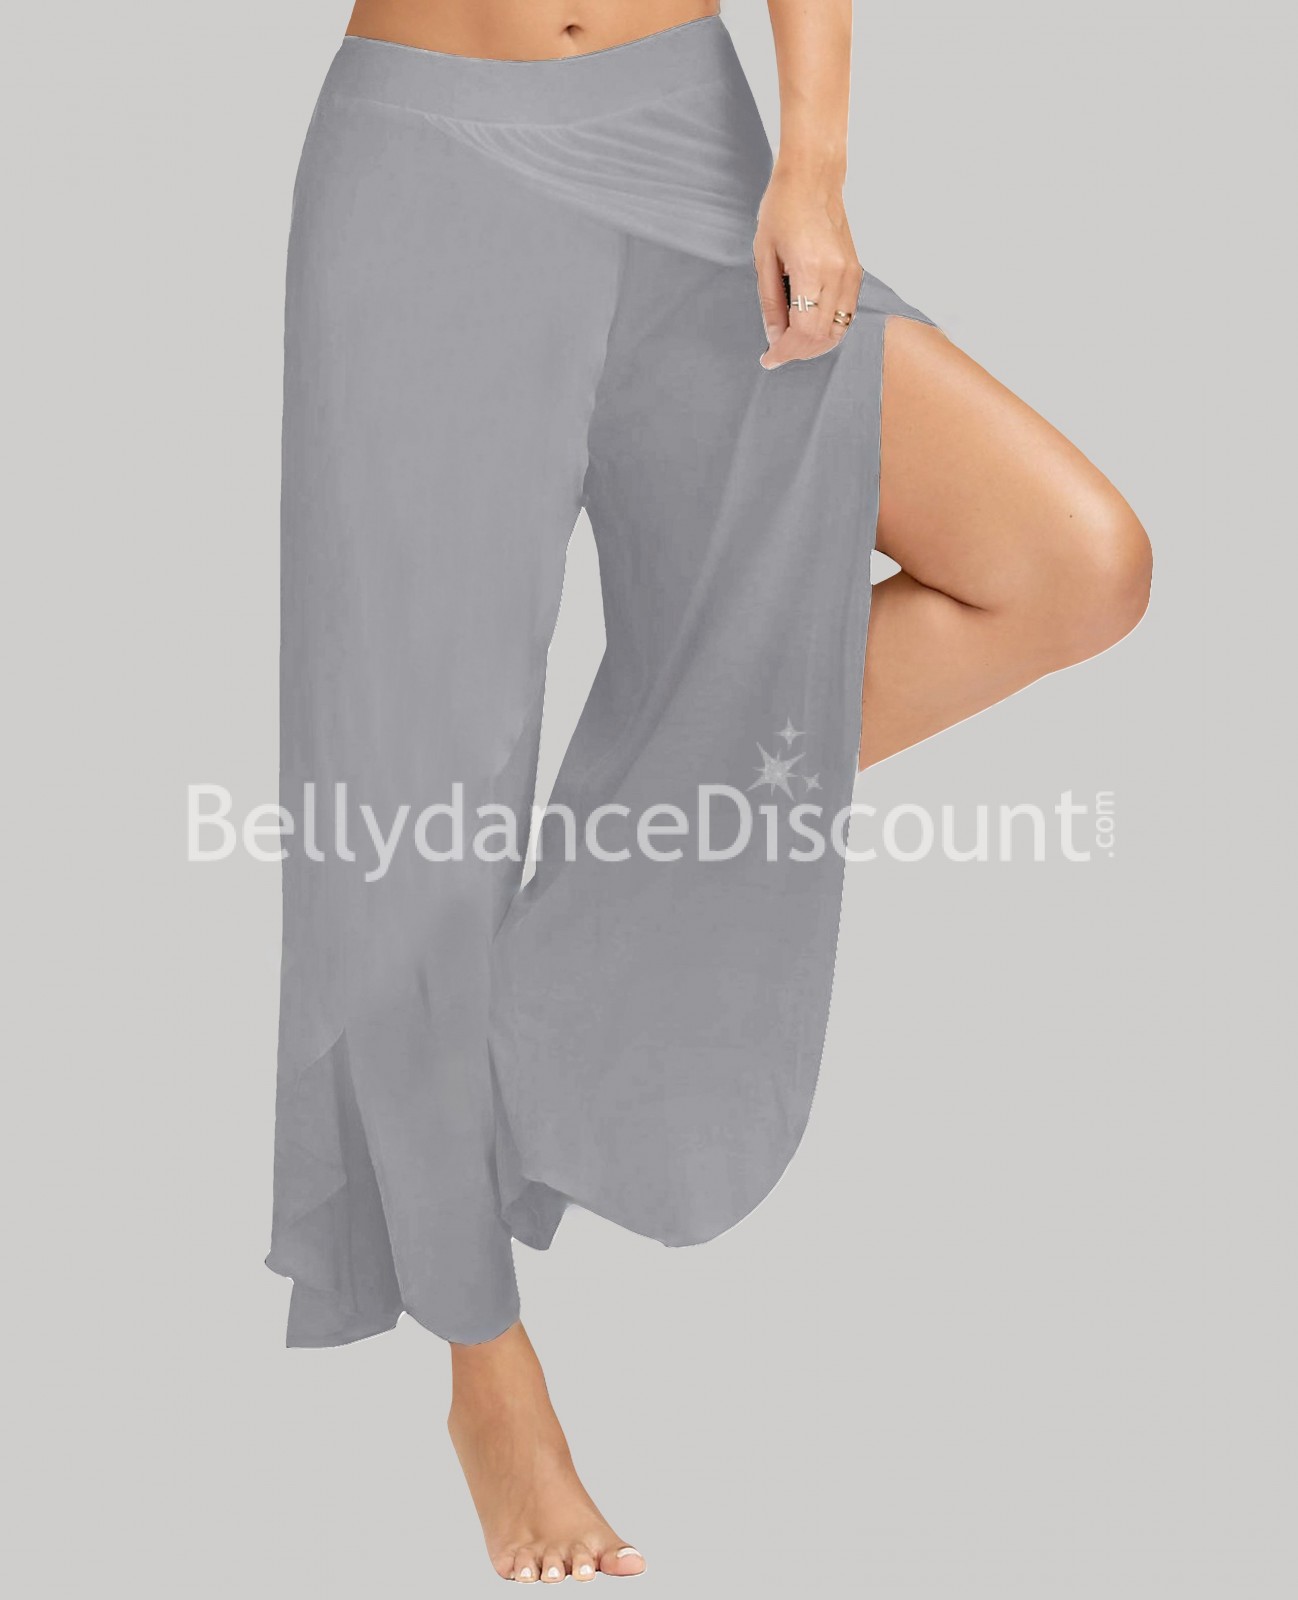 Light grey dance pants - 24,90 €